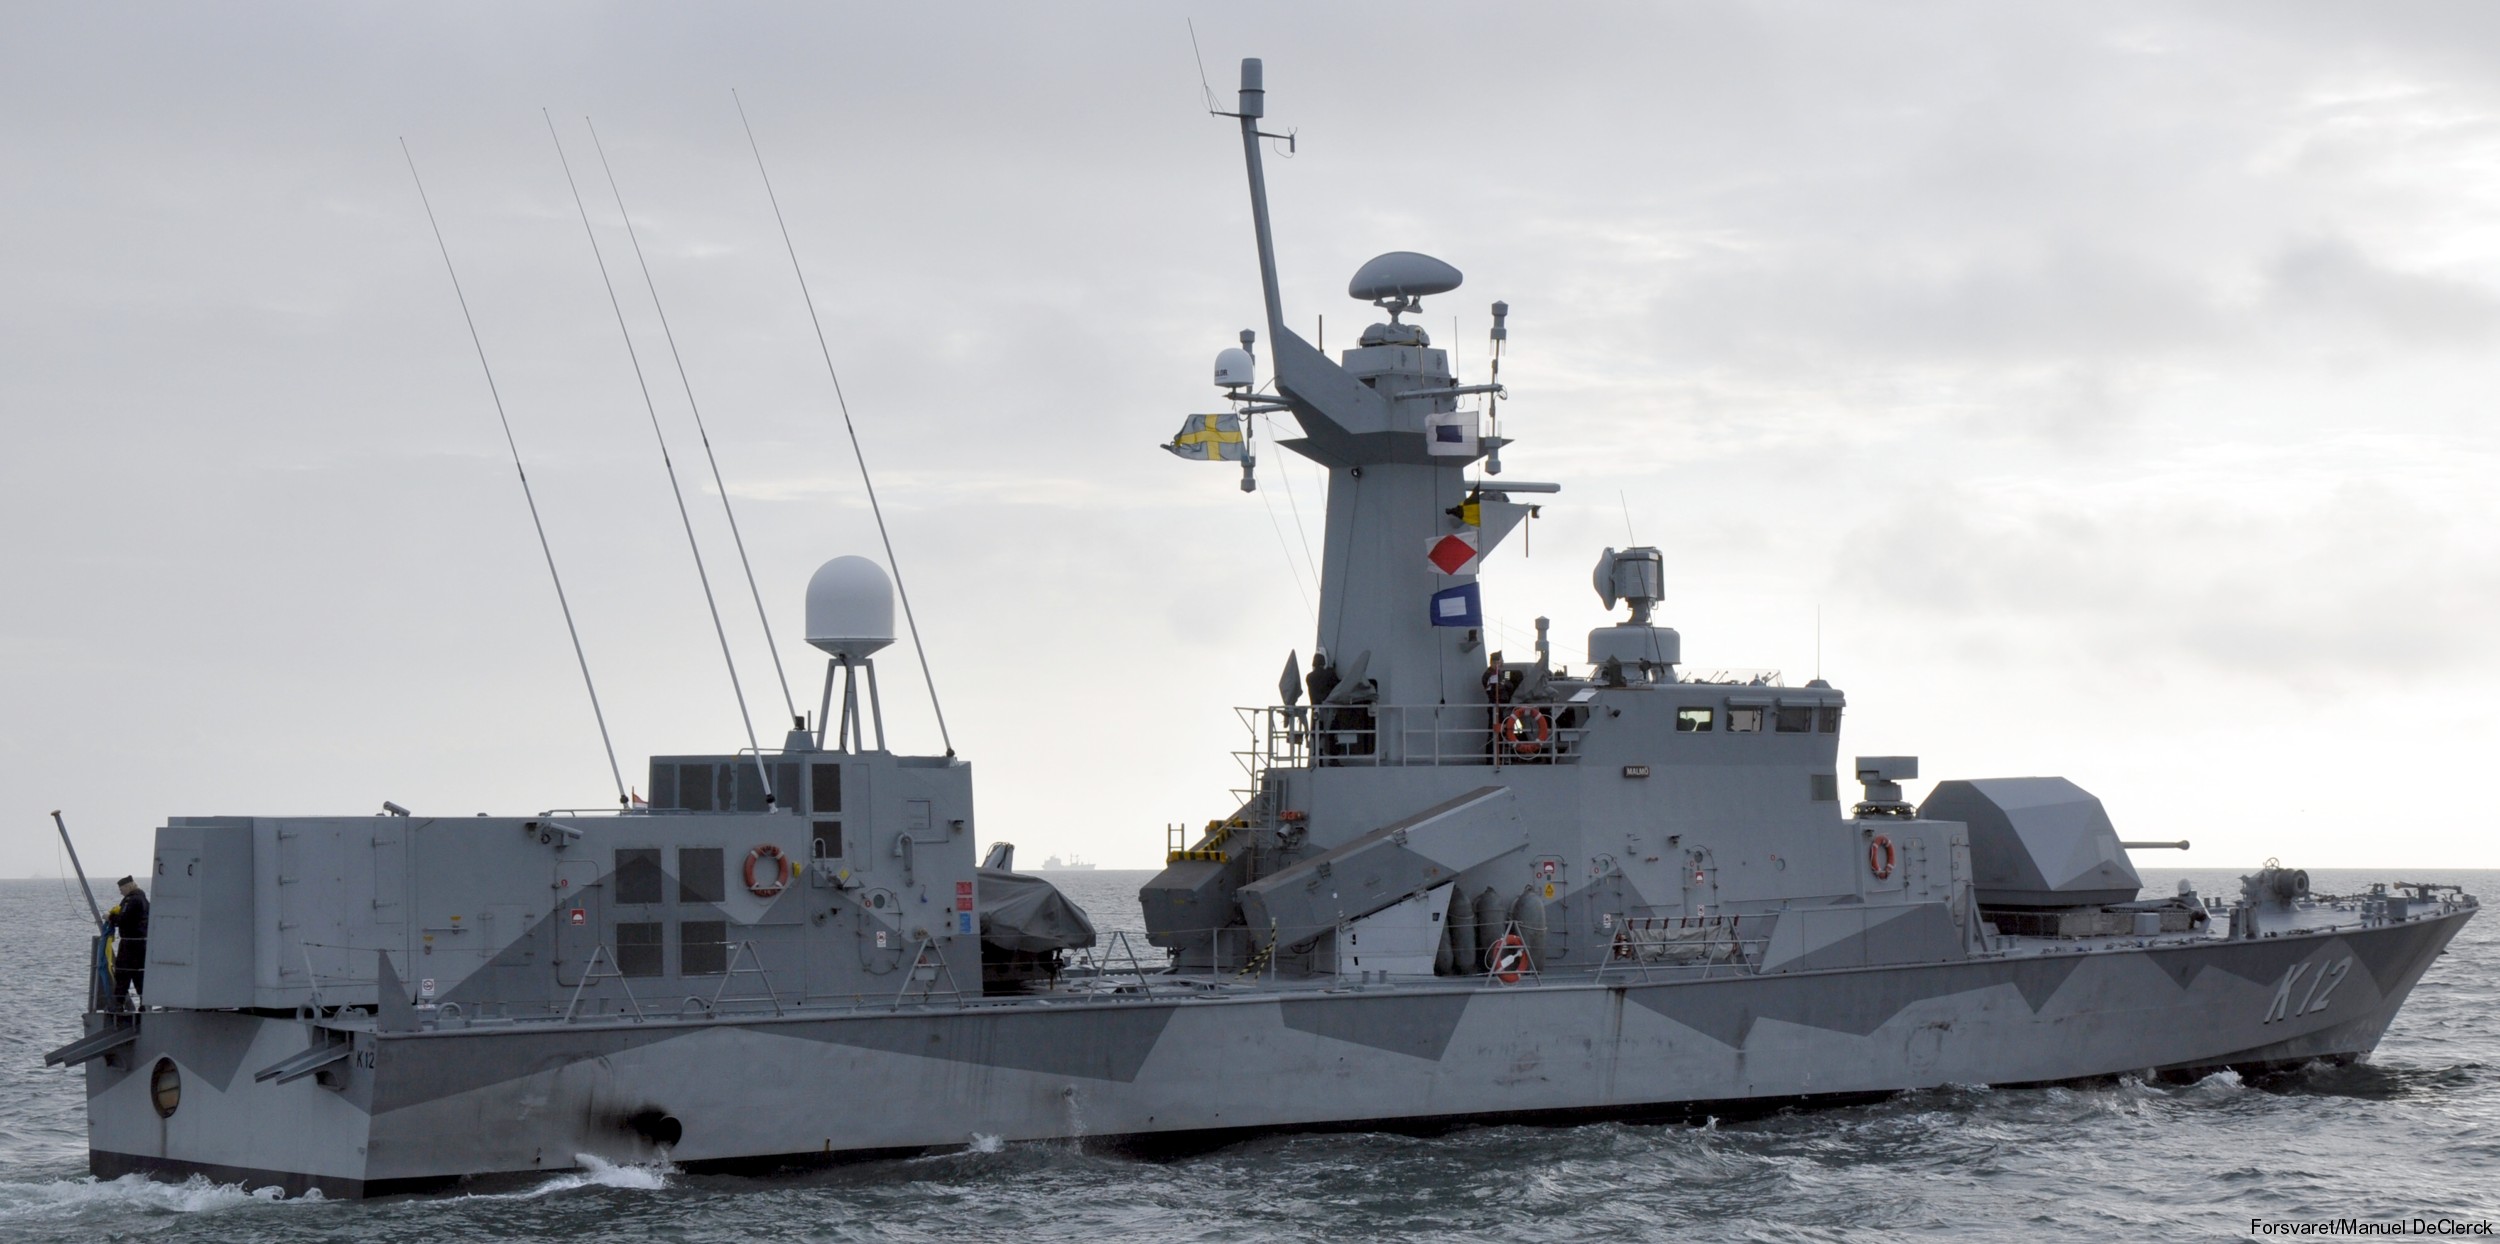 K12 P12 hswms malmö hms stockholm class corvette patrol vessel swedish navy svenska marinen forsvarsmakten 11